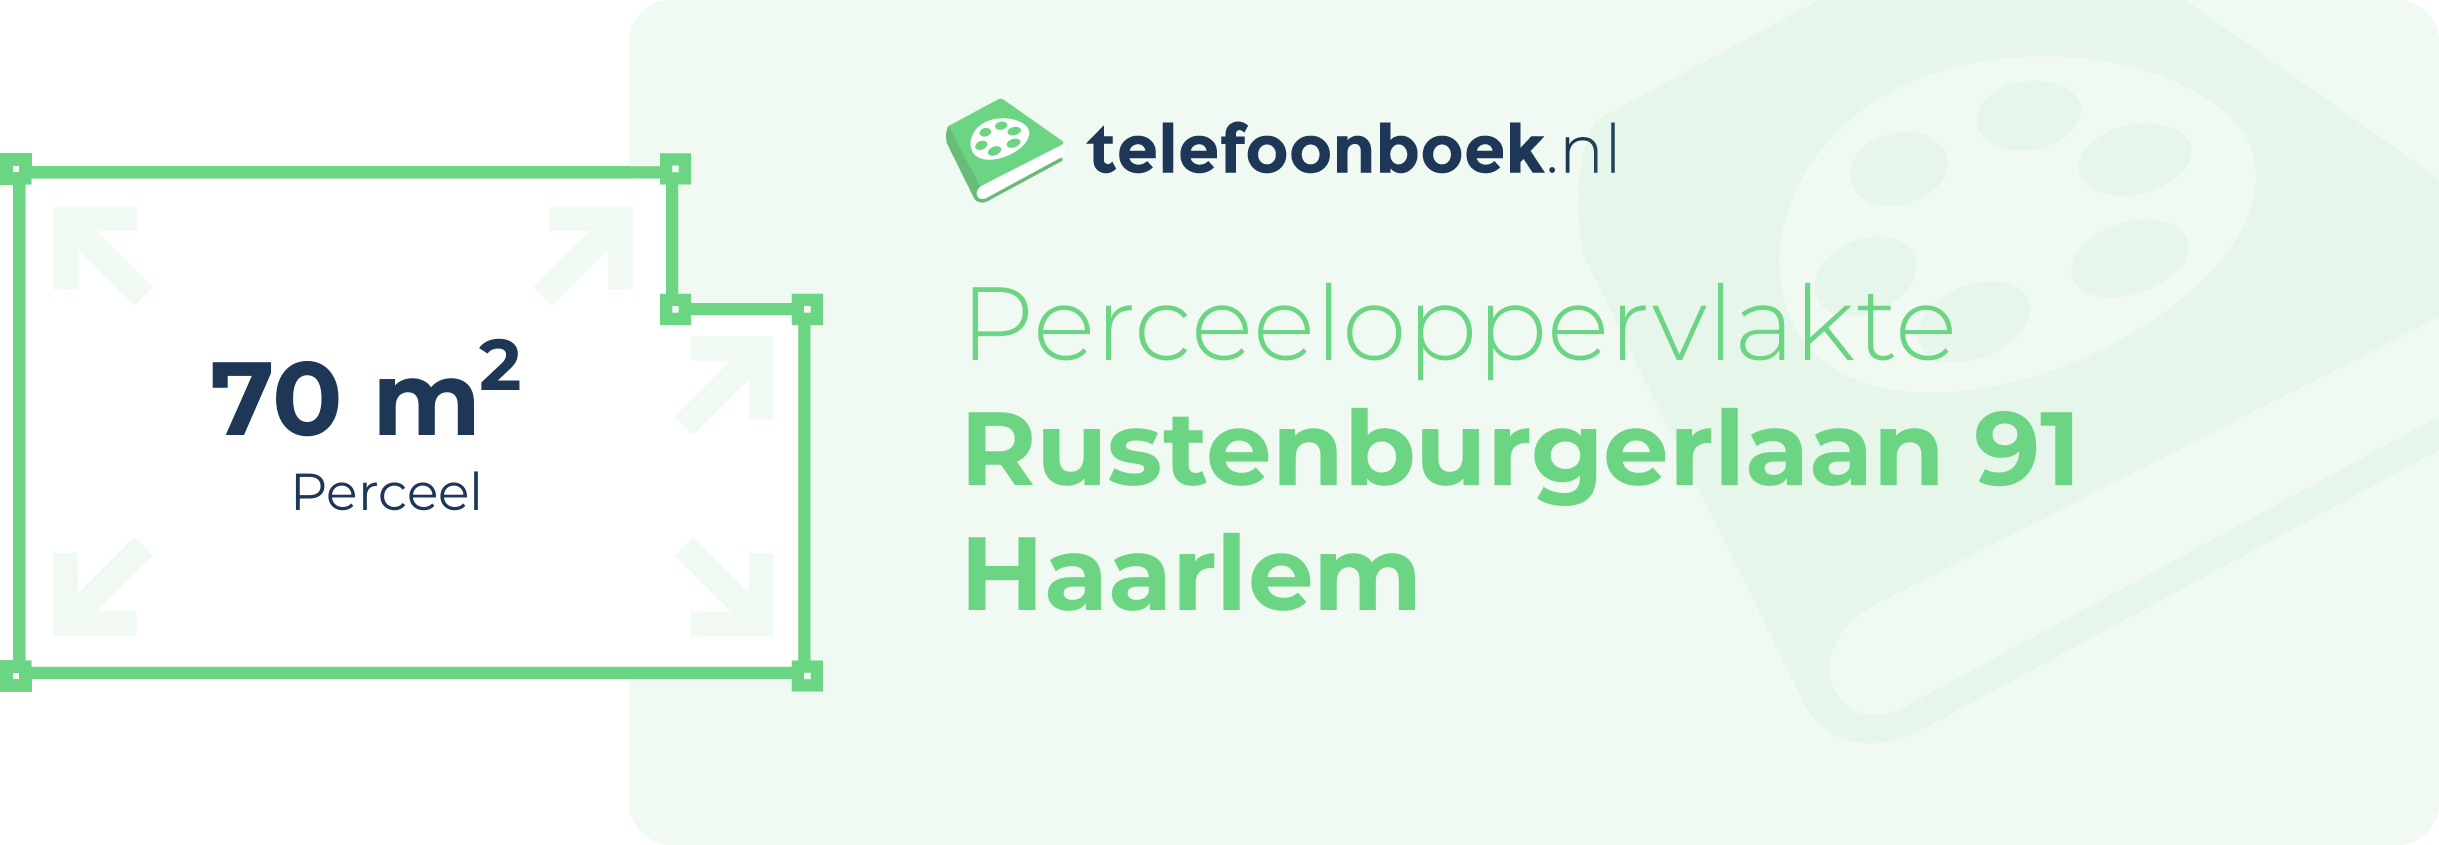 Perceeloppervlakte Rustenburgerlaan 91 Haarlem